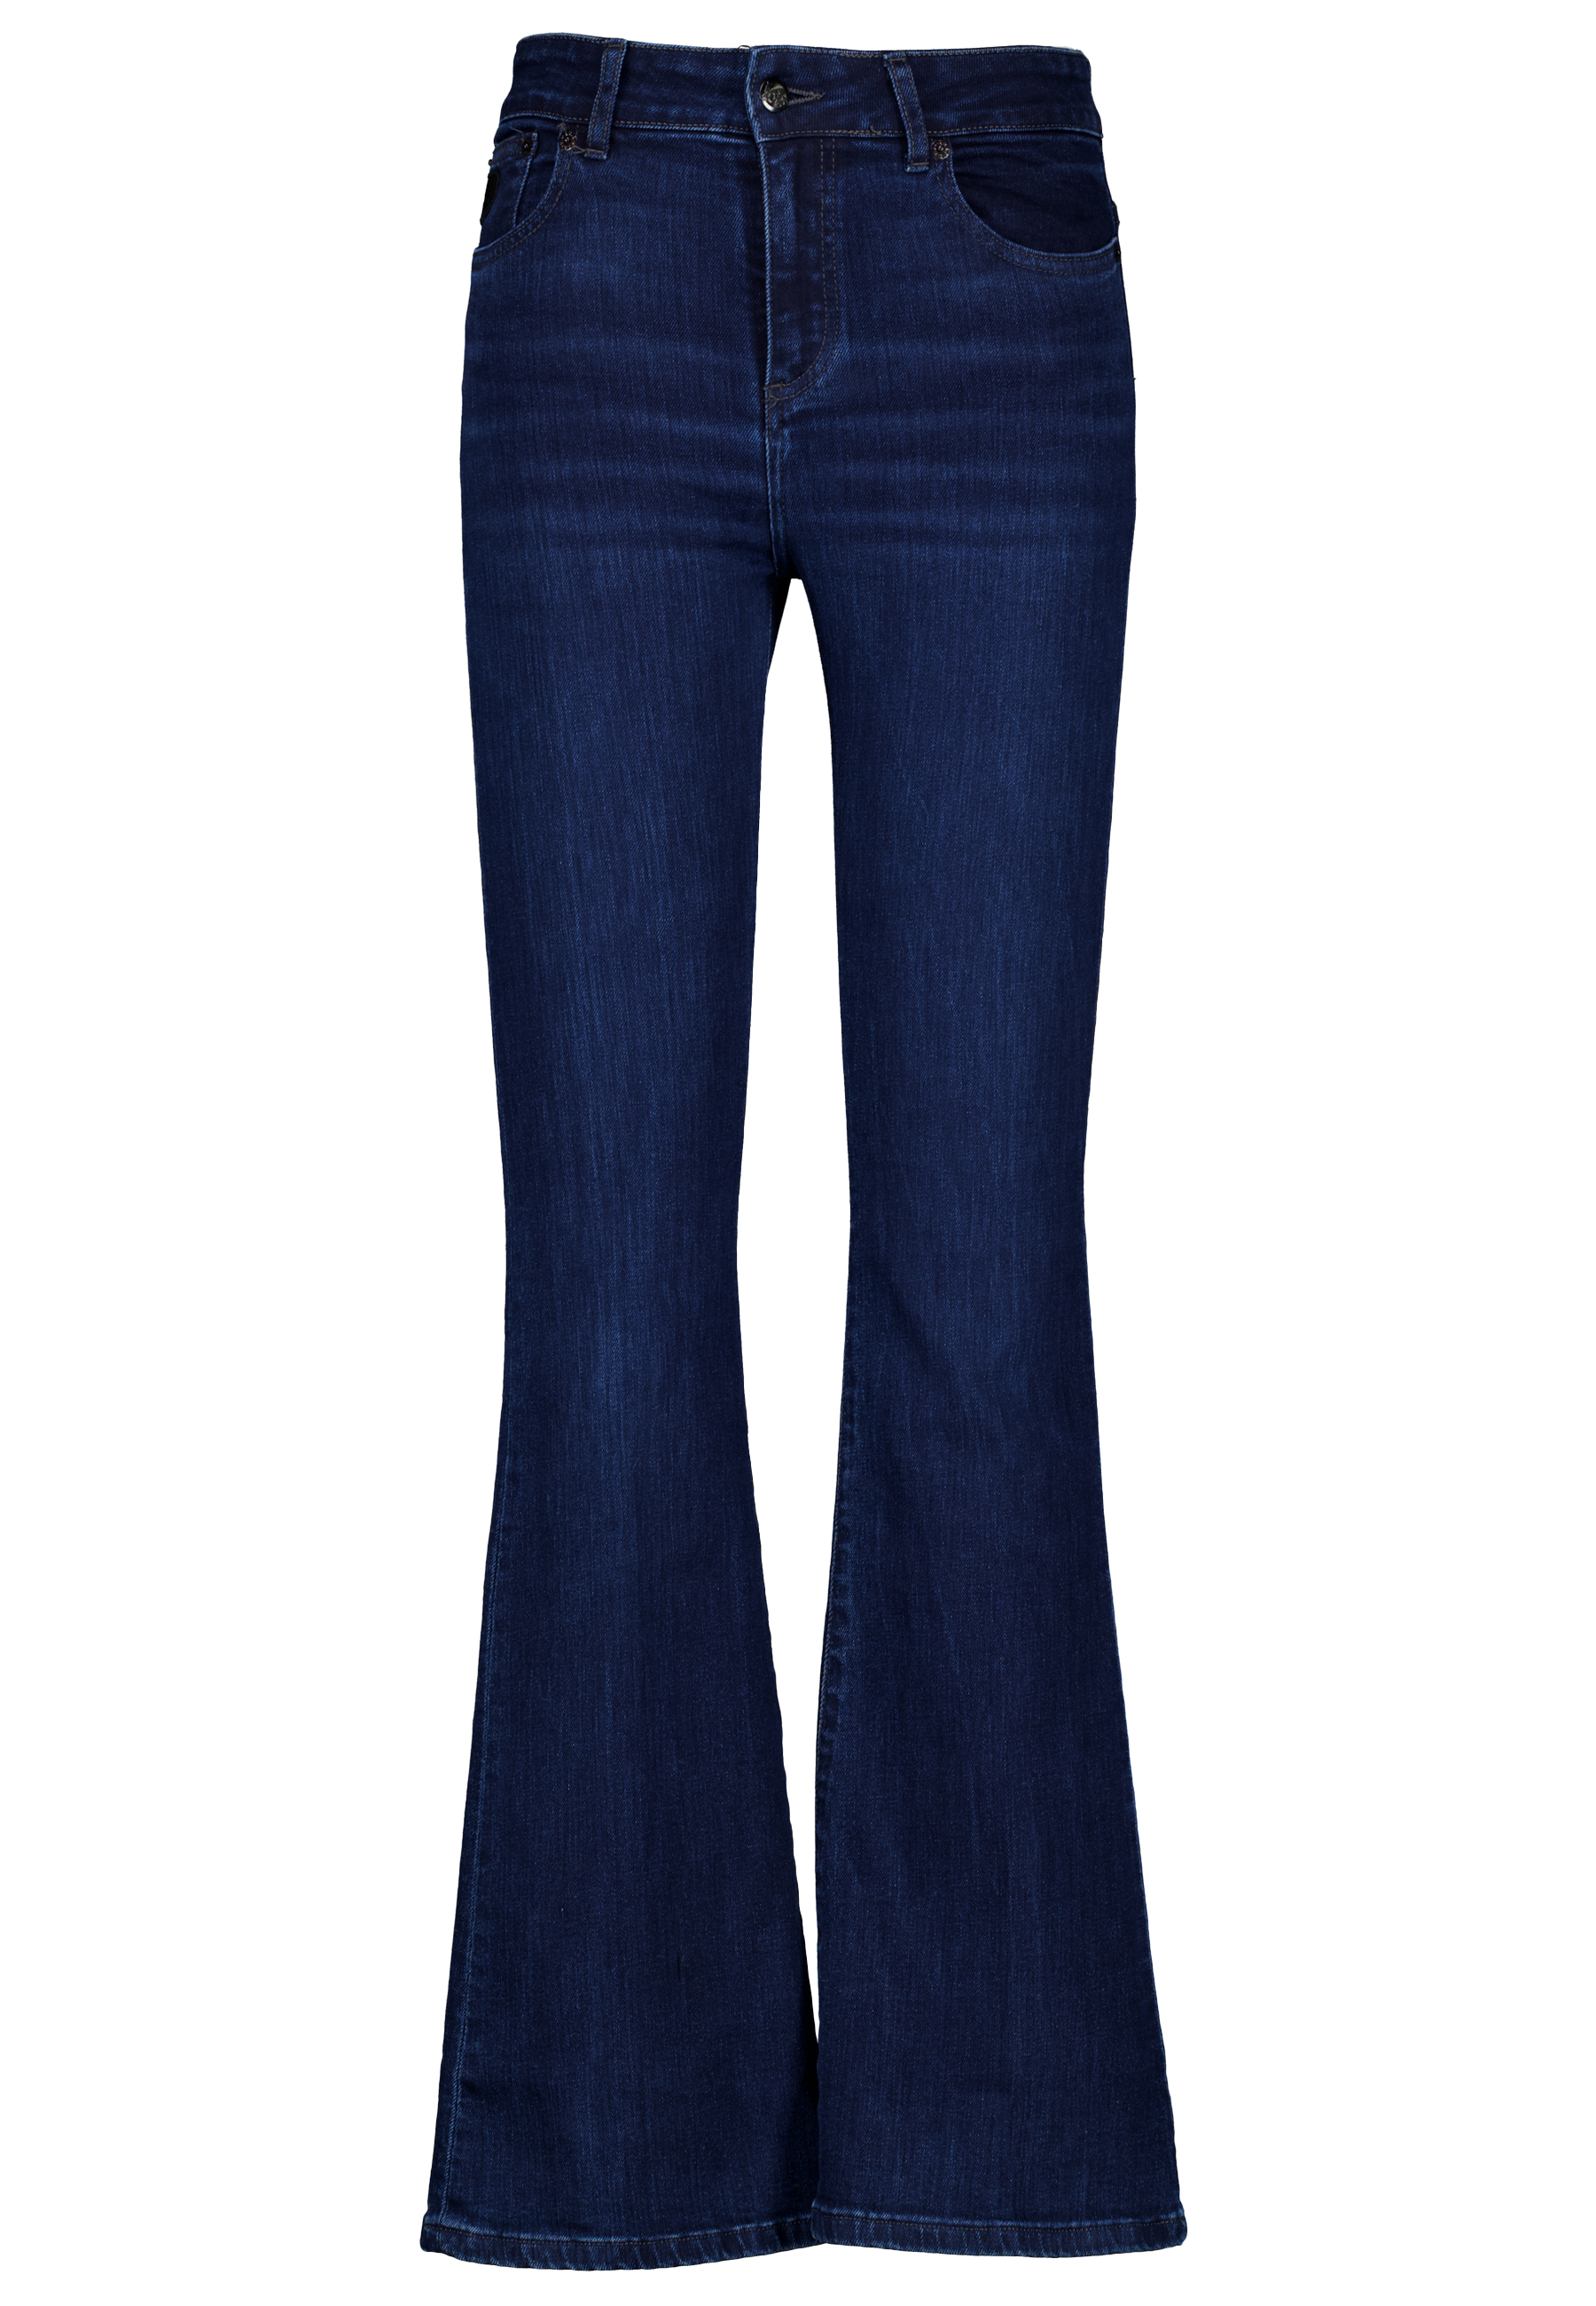 Lois jeans blauw Dames maat 27/32